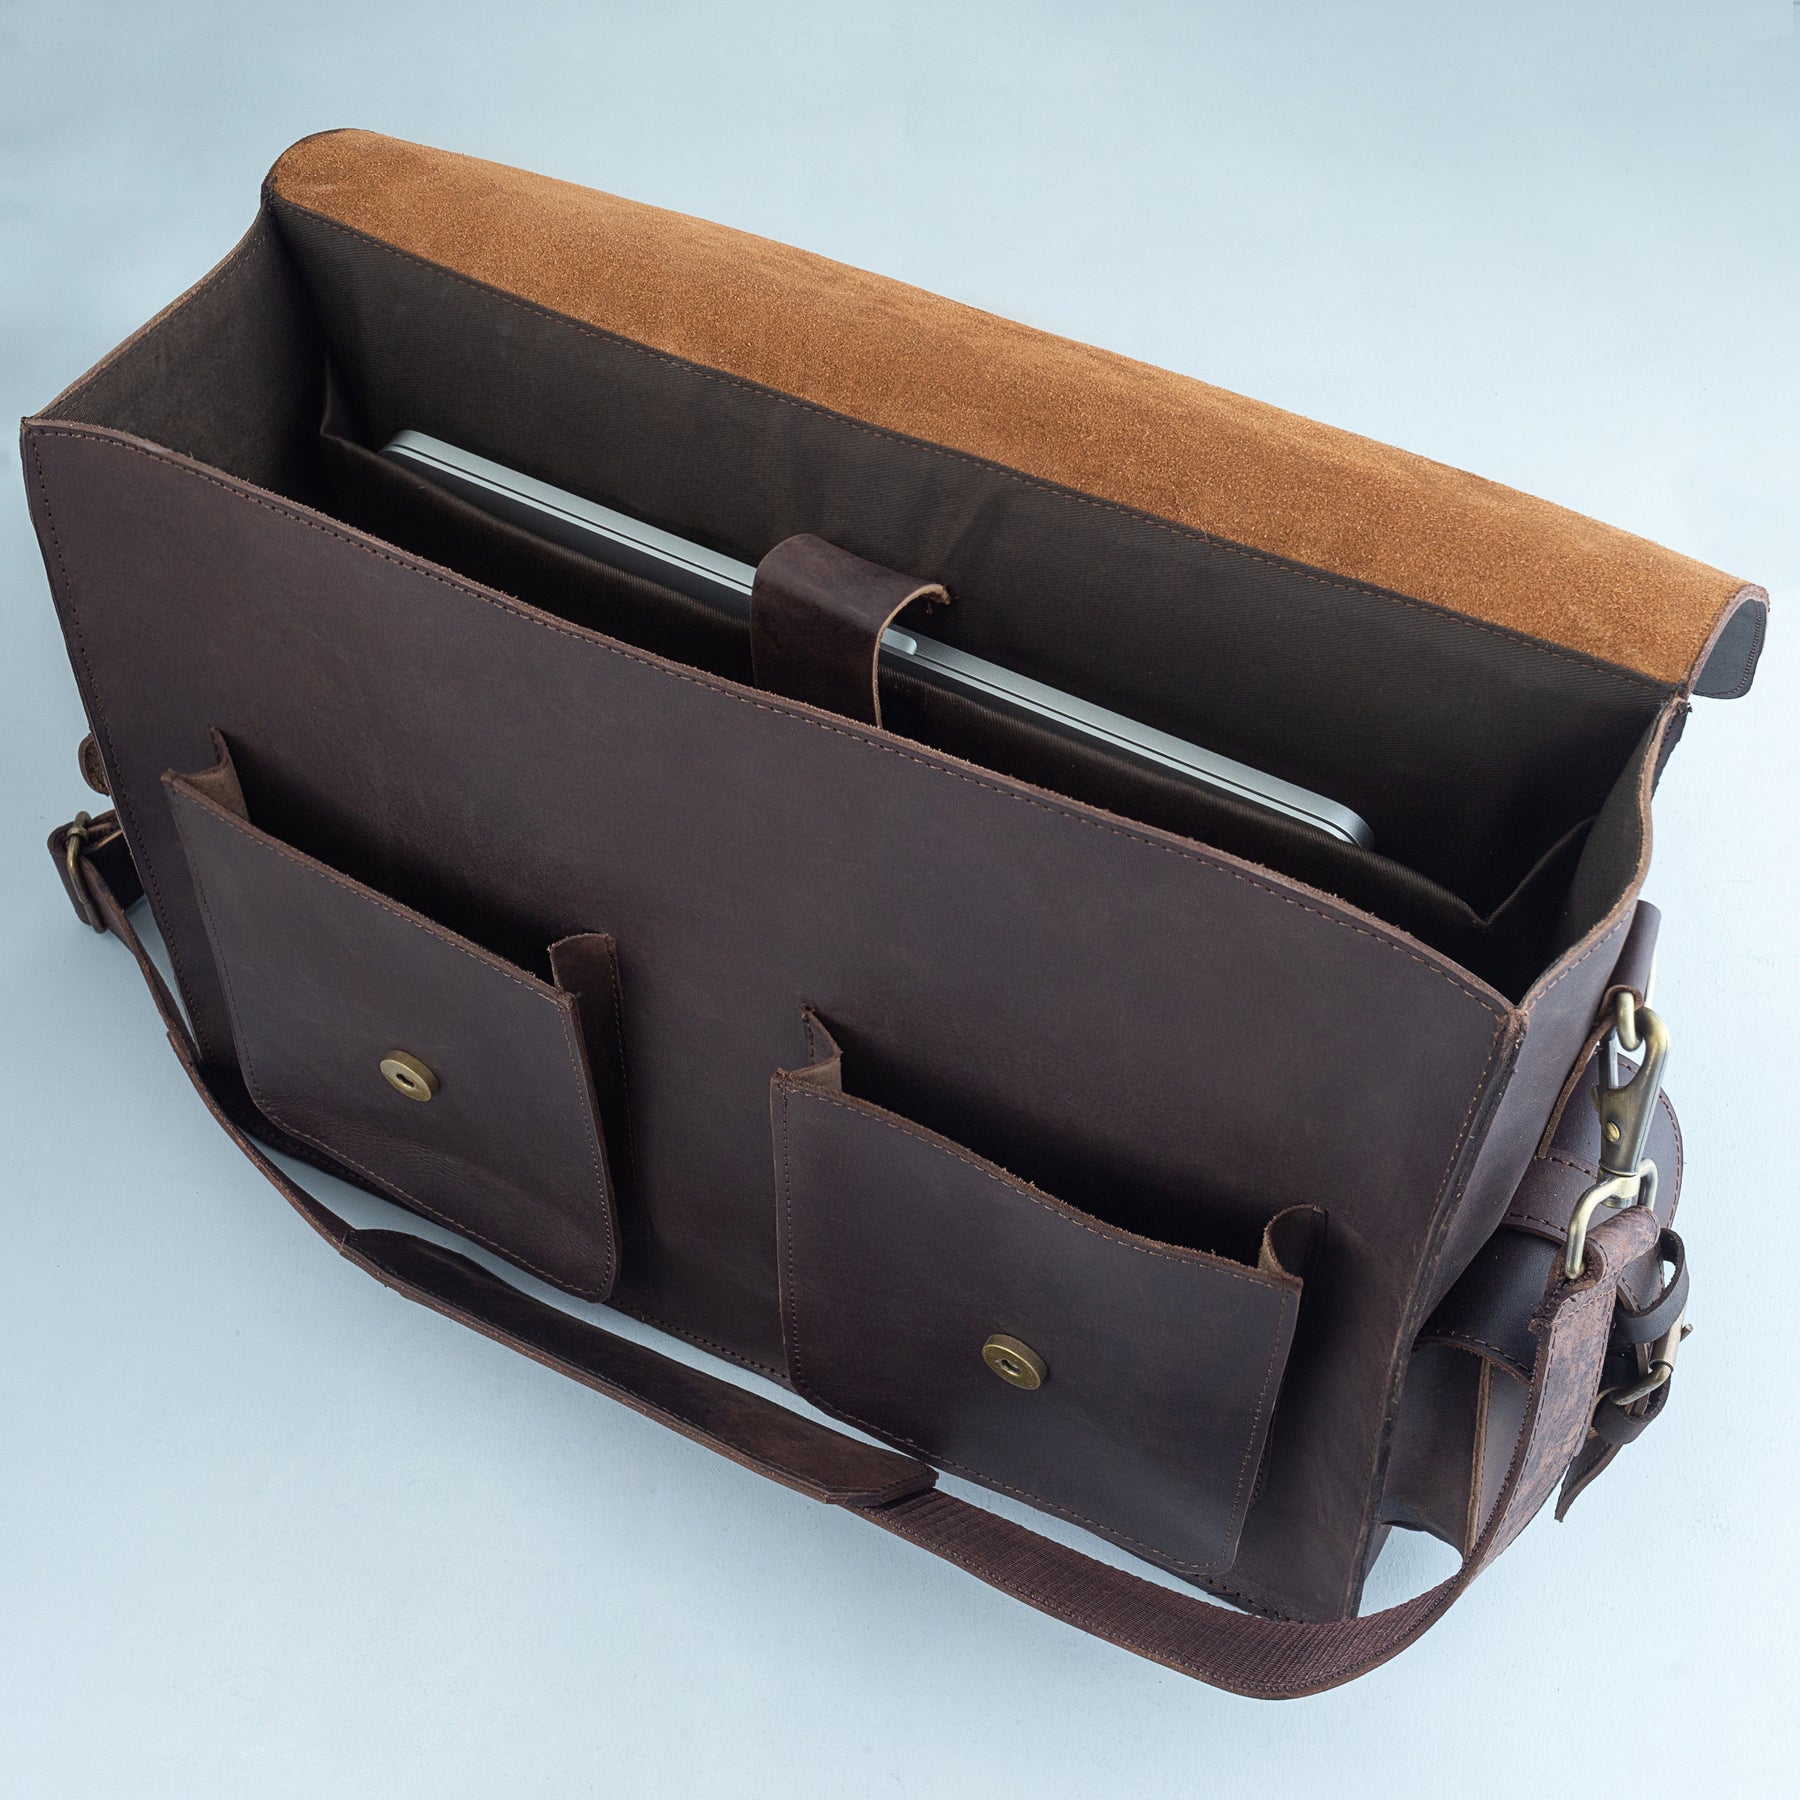 Master Mason Blue Lodge Briefcase - Handmade Leather - Bricks Masons